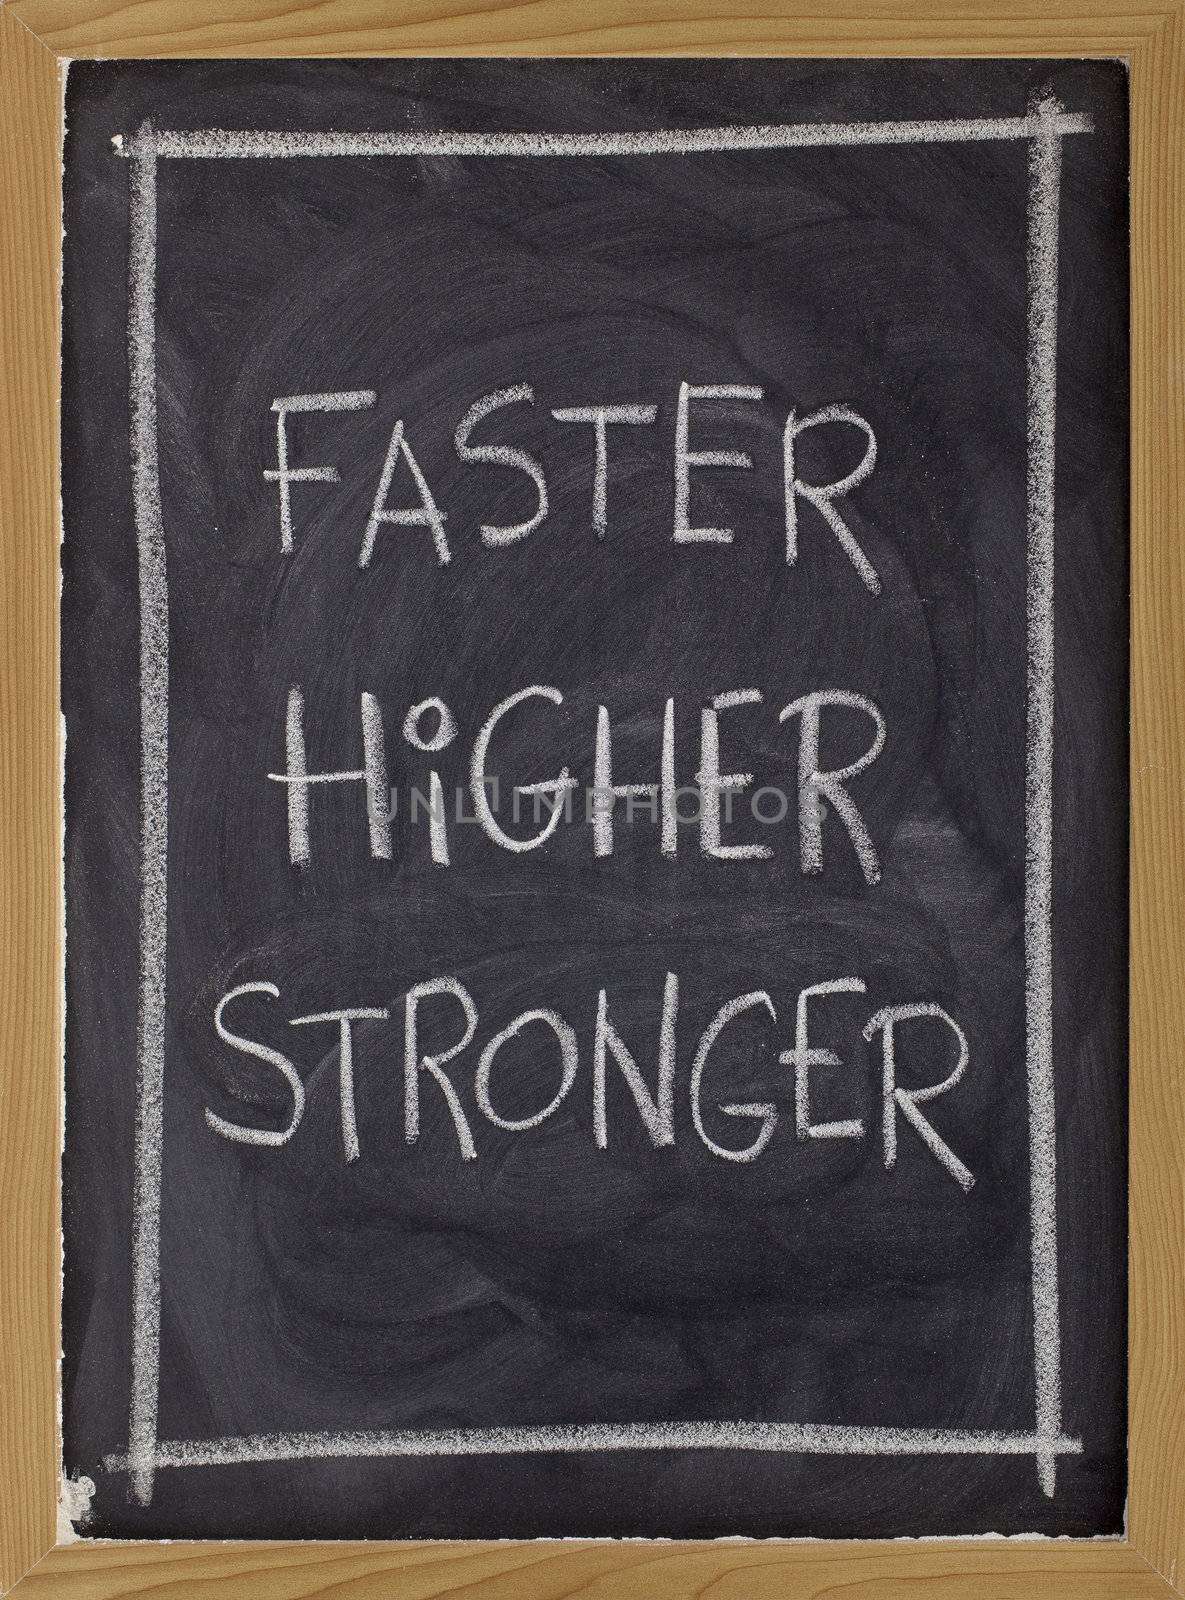 olympic motto (faster, higher, stronger) handwritten with white chalk on blackboard